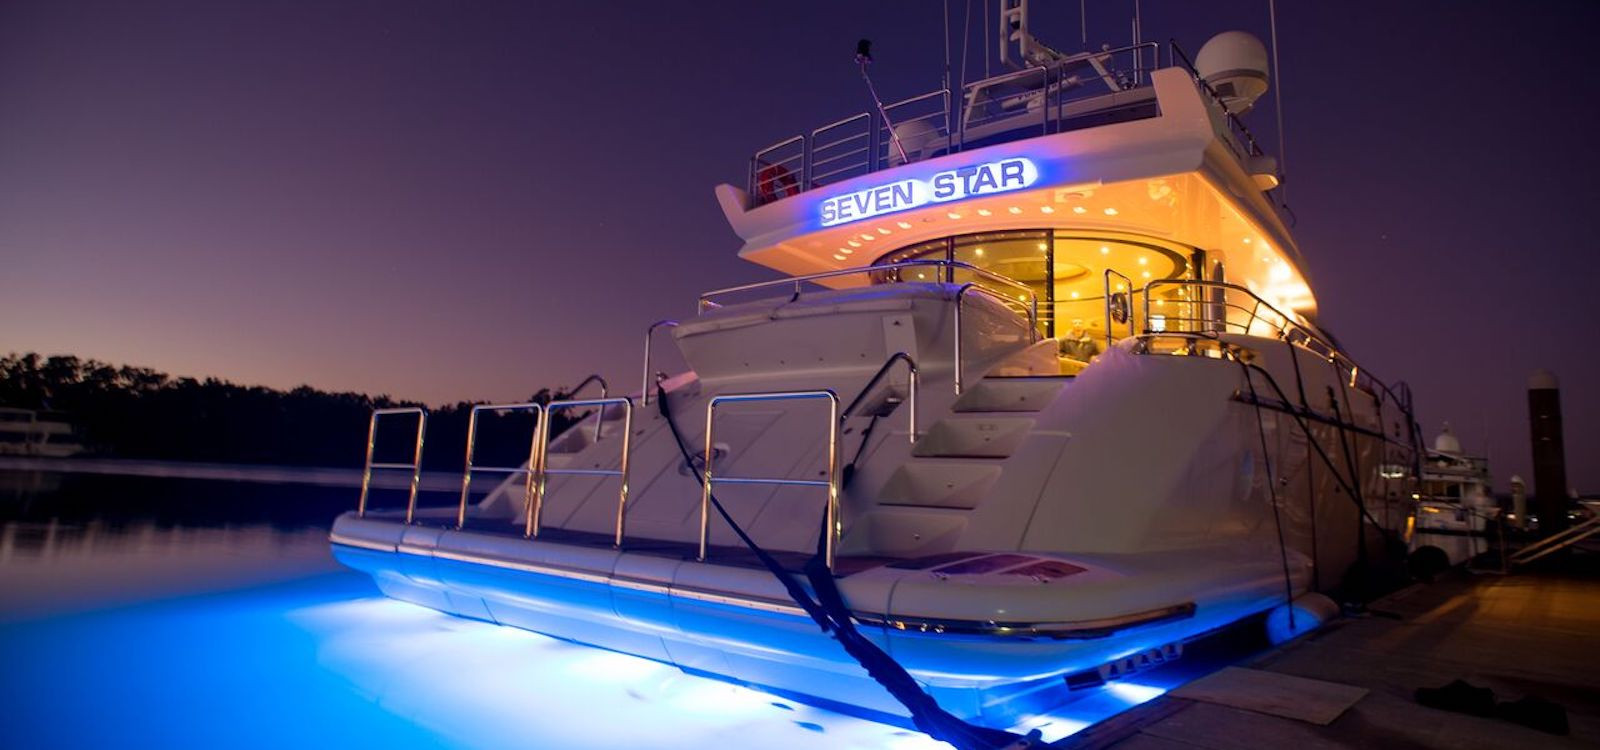 Night lights on superyacht hire on Seven Star